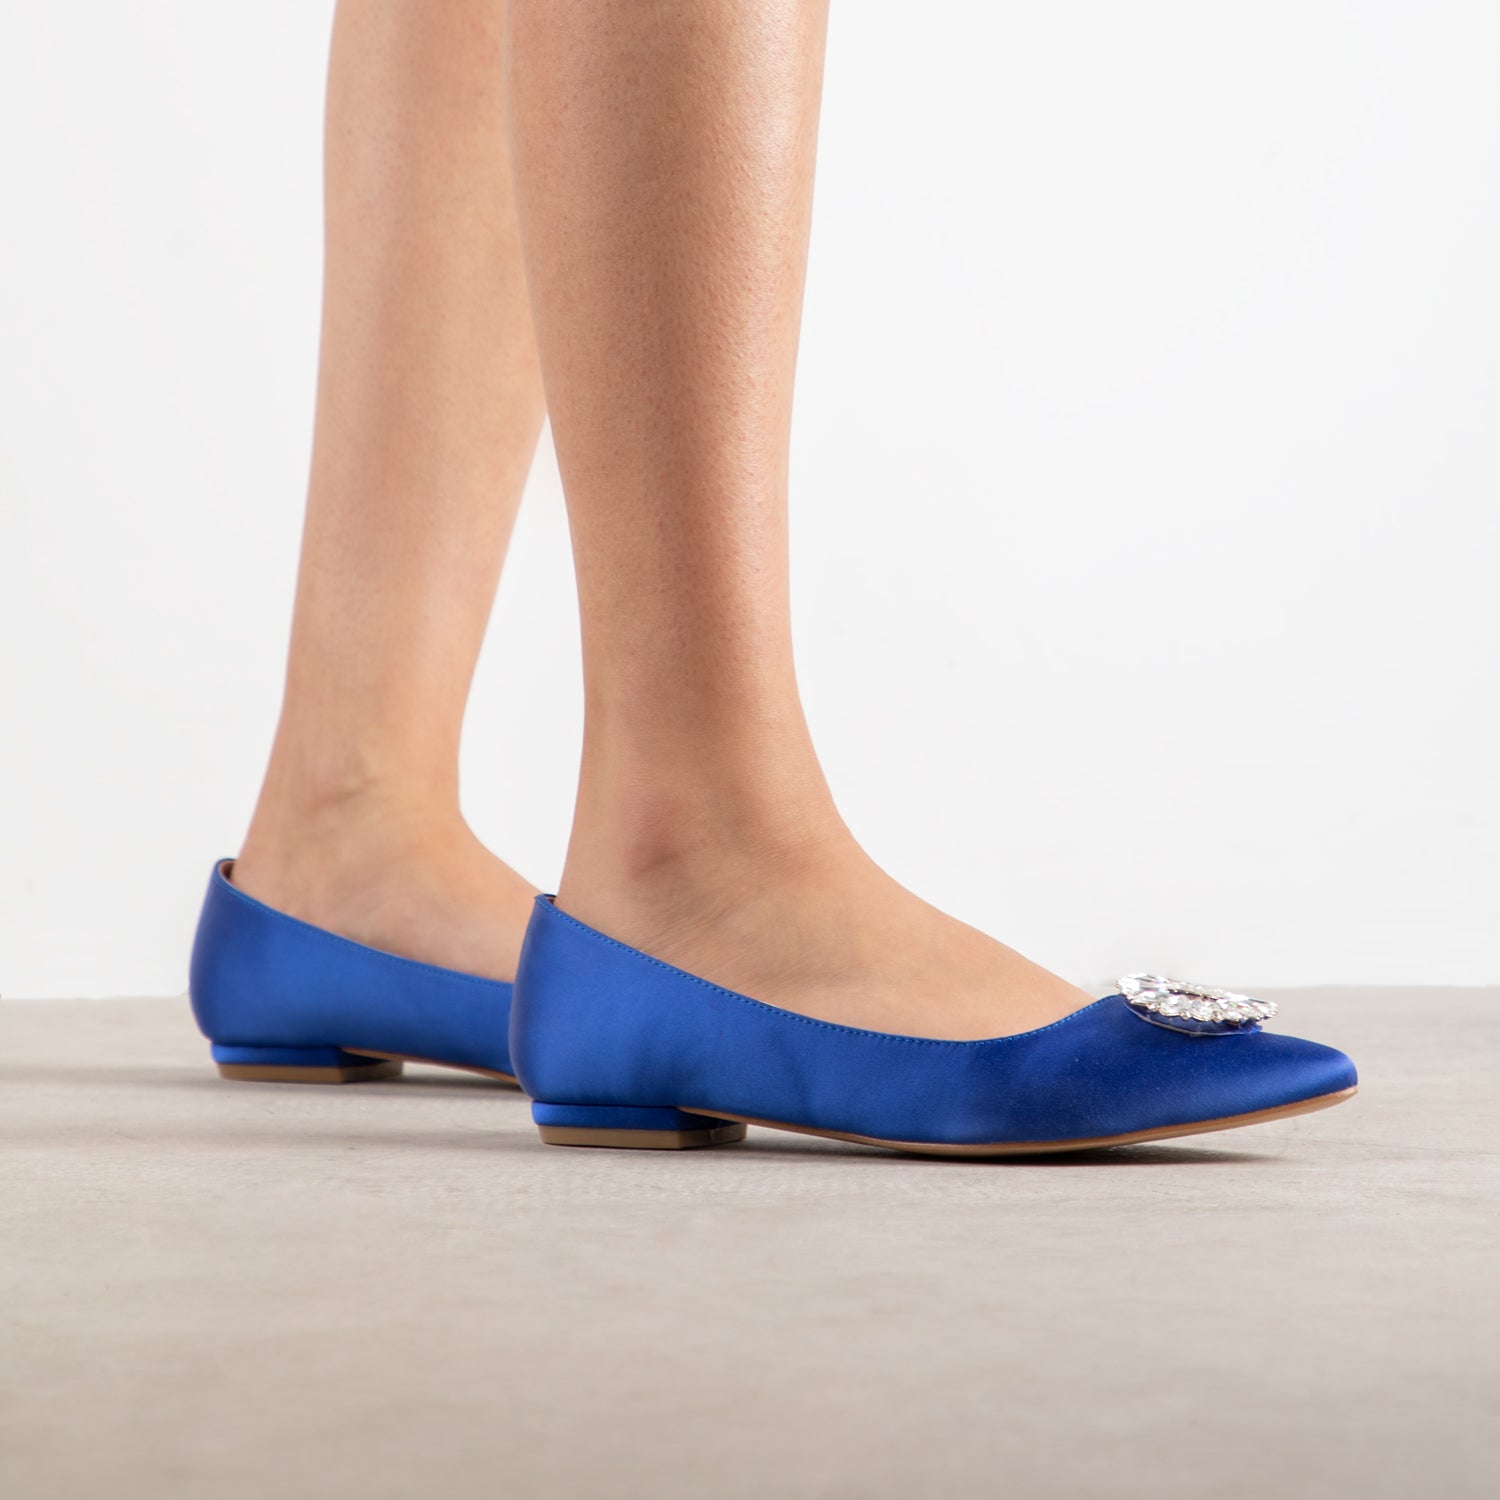 RAID Jennika Flat Shoe in Blue Satin